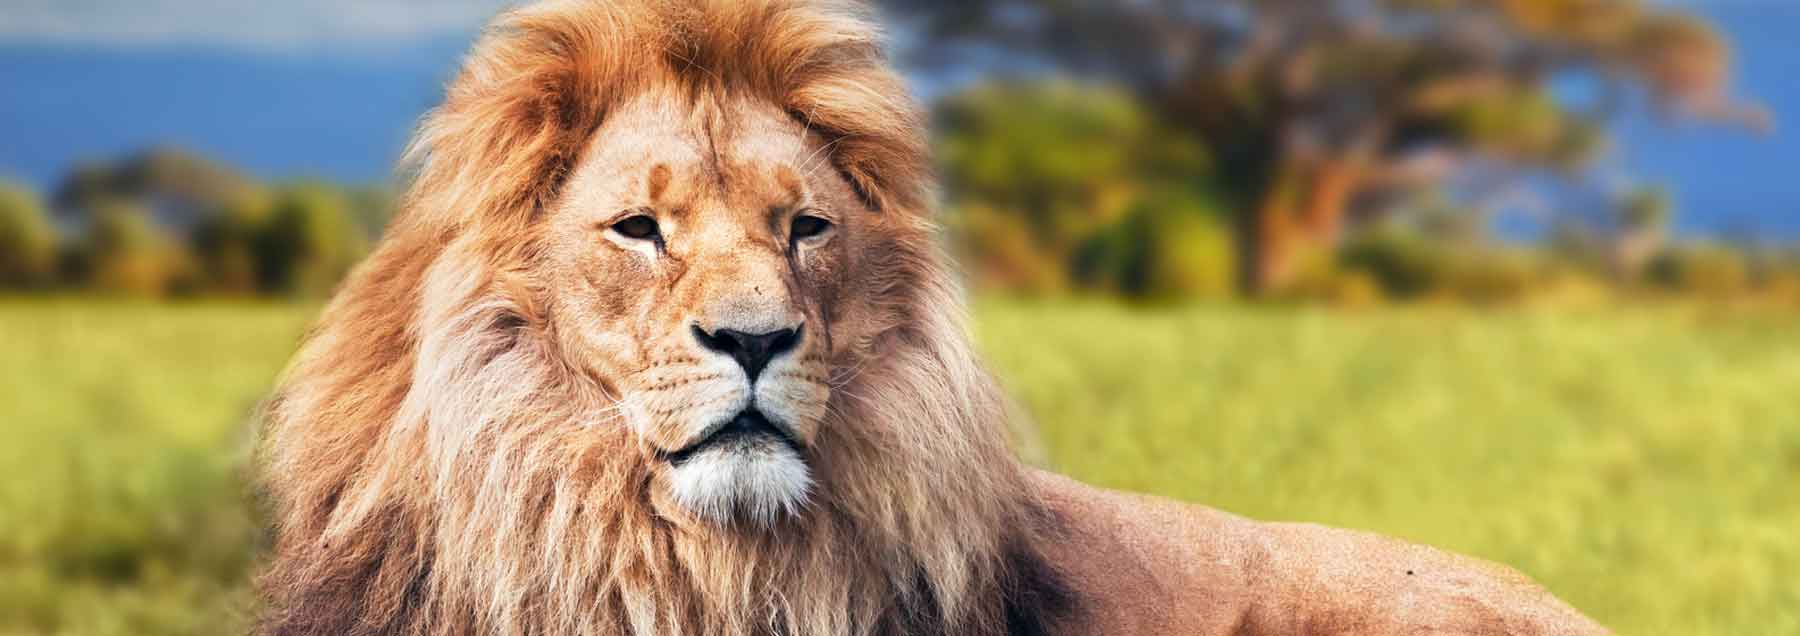 Lion in Africa - Safari